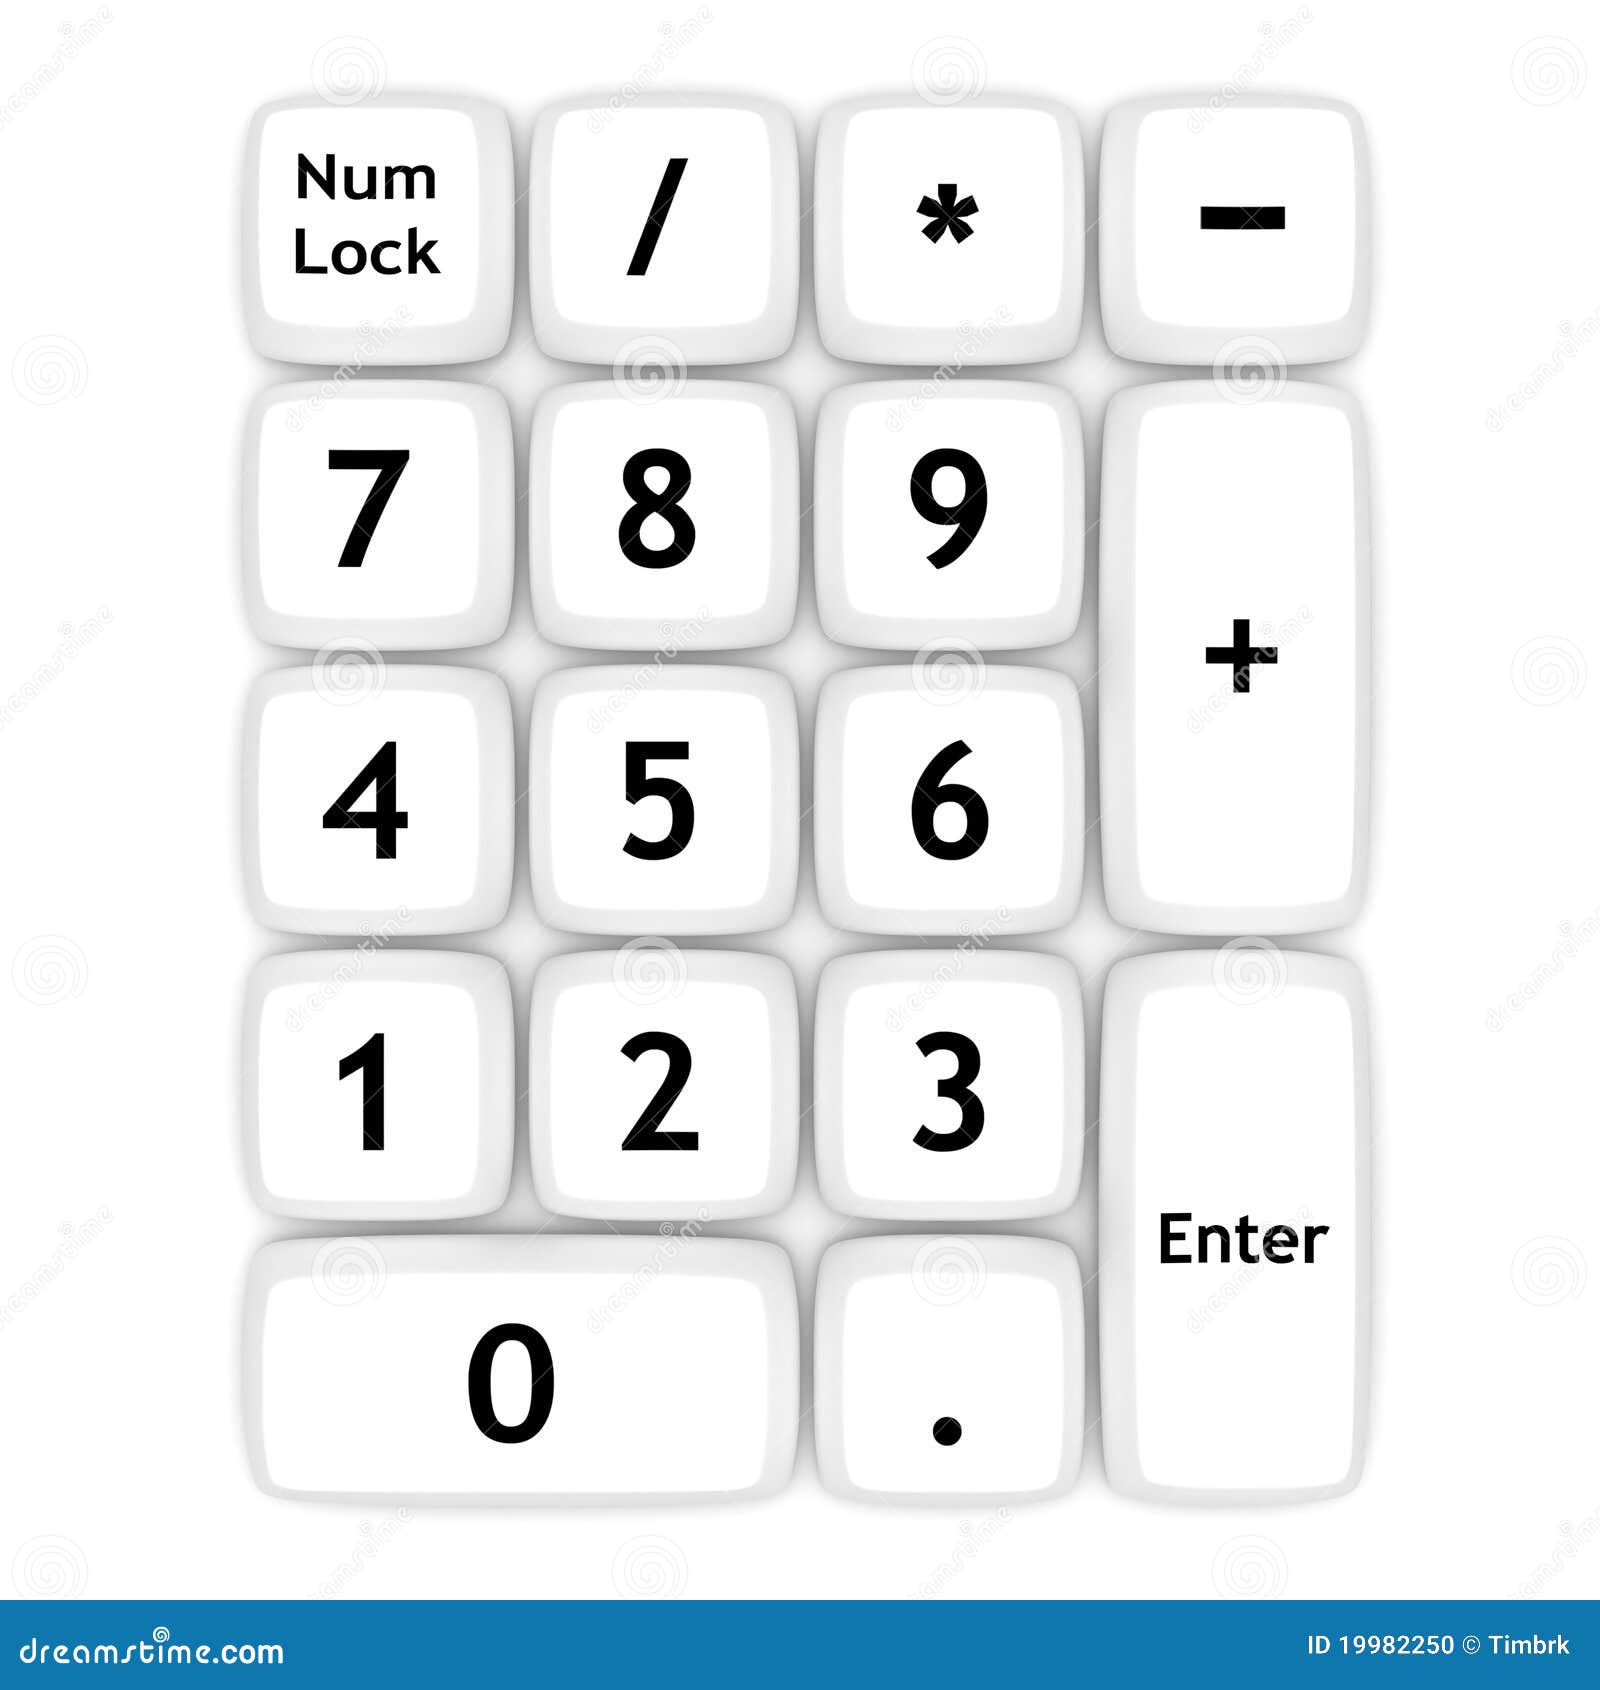 Раскладка клавиатуры цифры. Клавиатуры с цифрами белая. Раскладка цифр на клавиатуре. Шаблон цифр для клавиатуры. Наклейки на клавиатуру цифры.